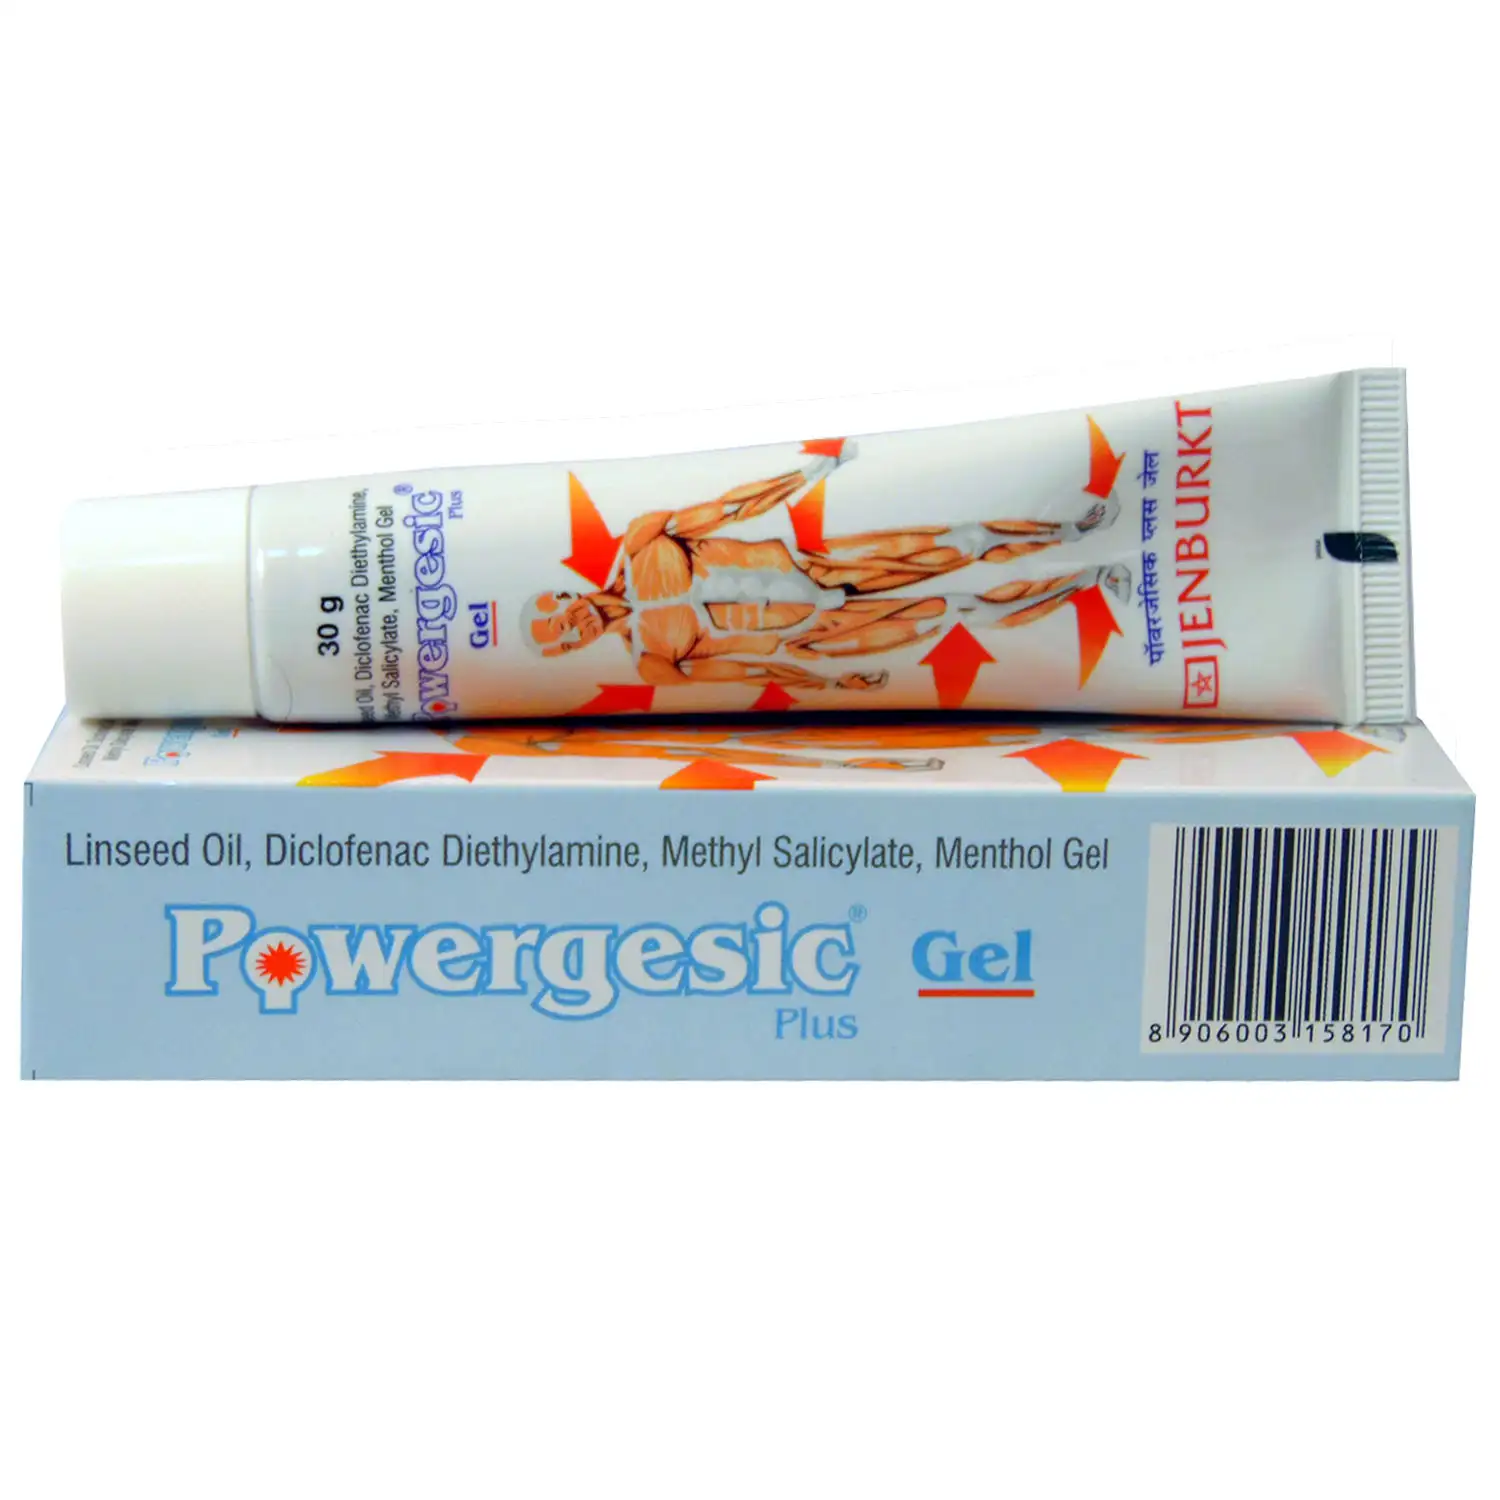 Powergesic Plus Gel | For Pains, Sprains, Backache, Lumbago, Muscle Stiffness, Neck, Shoulder & Joint Pain